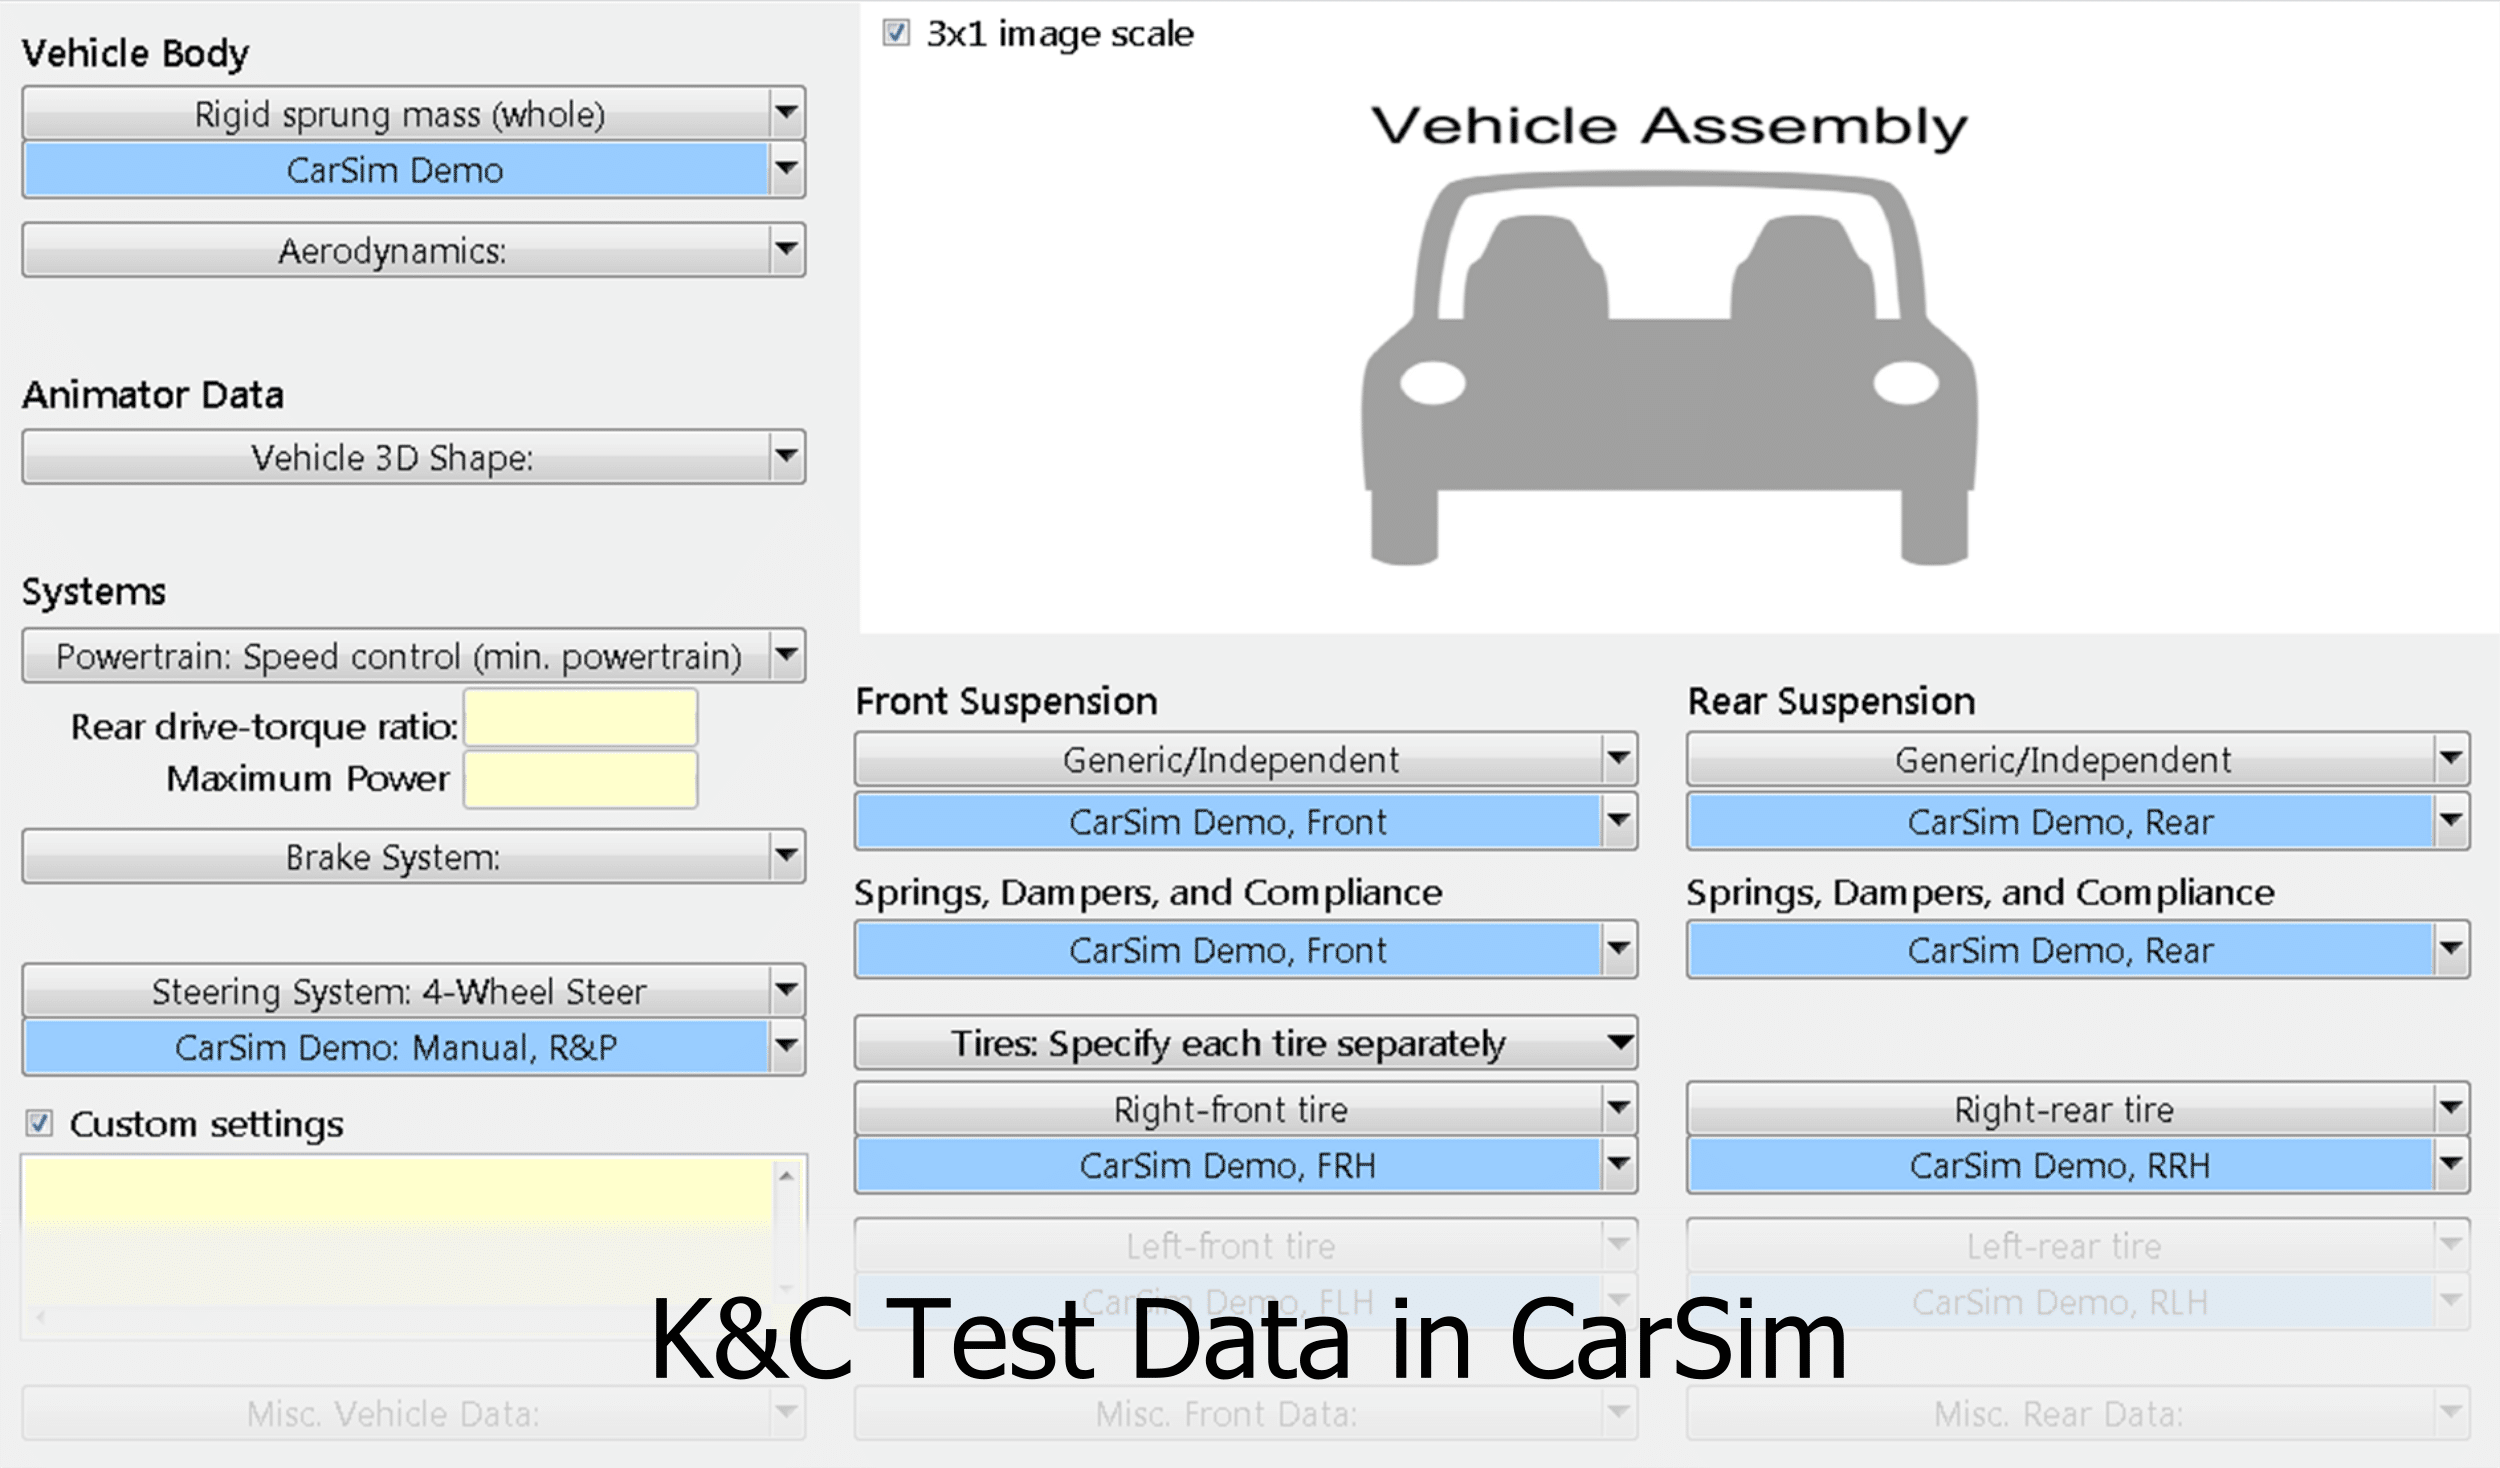 K&C data in CarSim through Parsfile